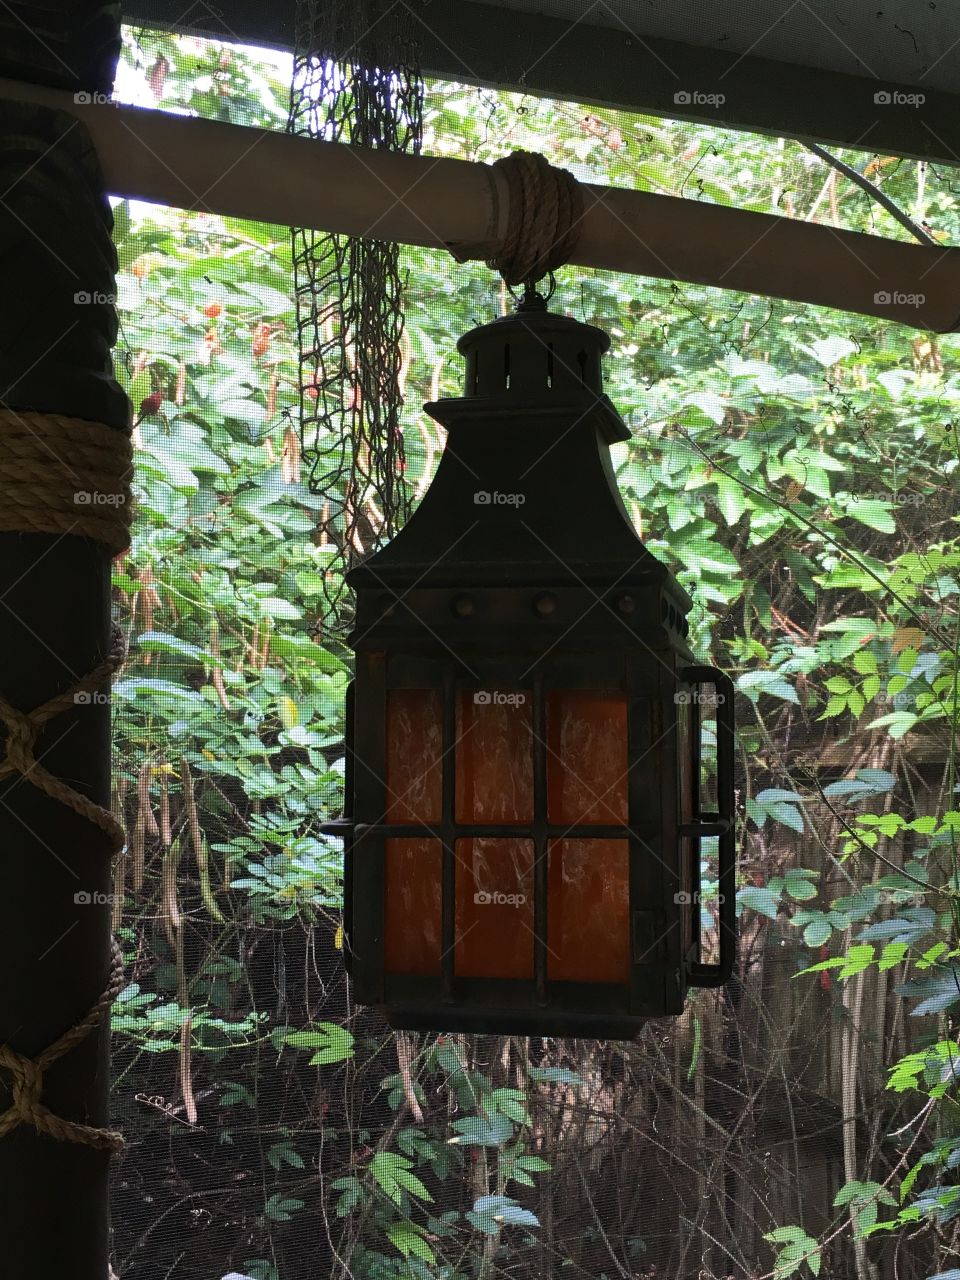 Random lantern